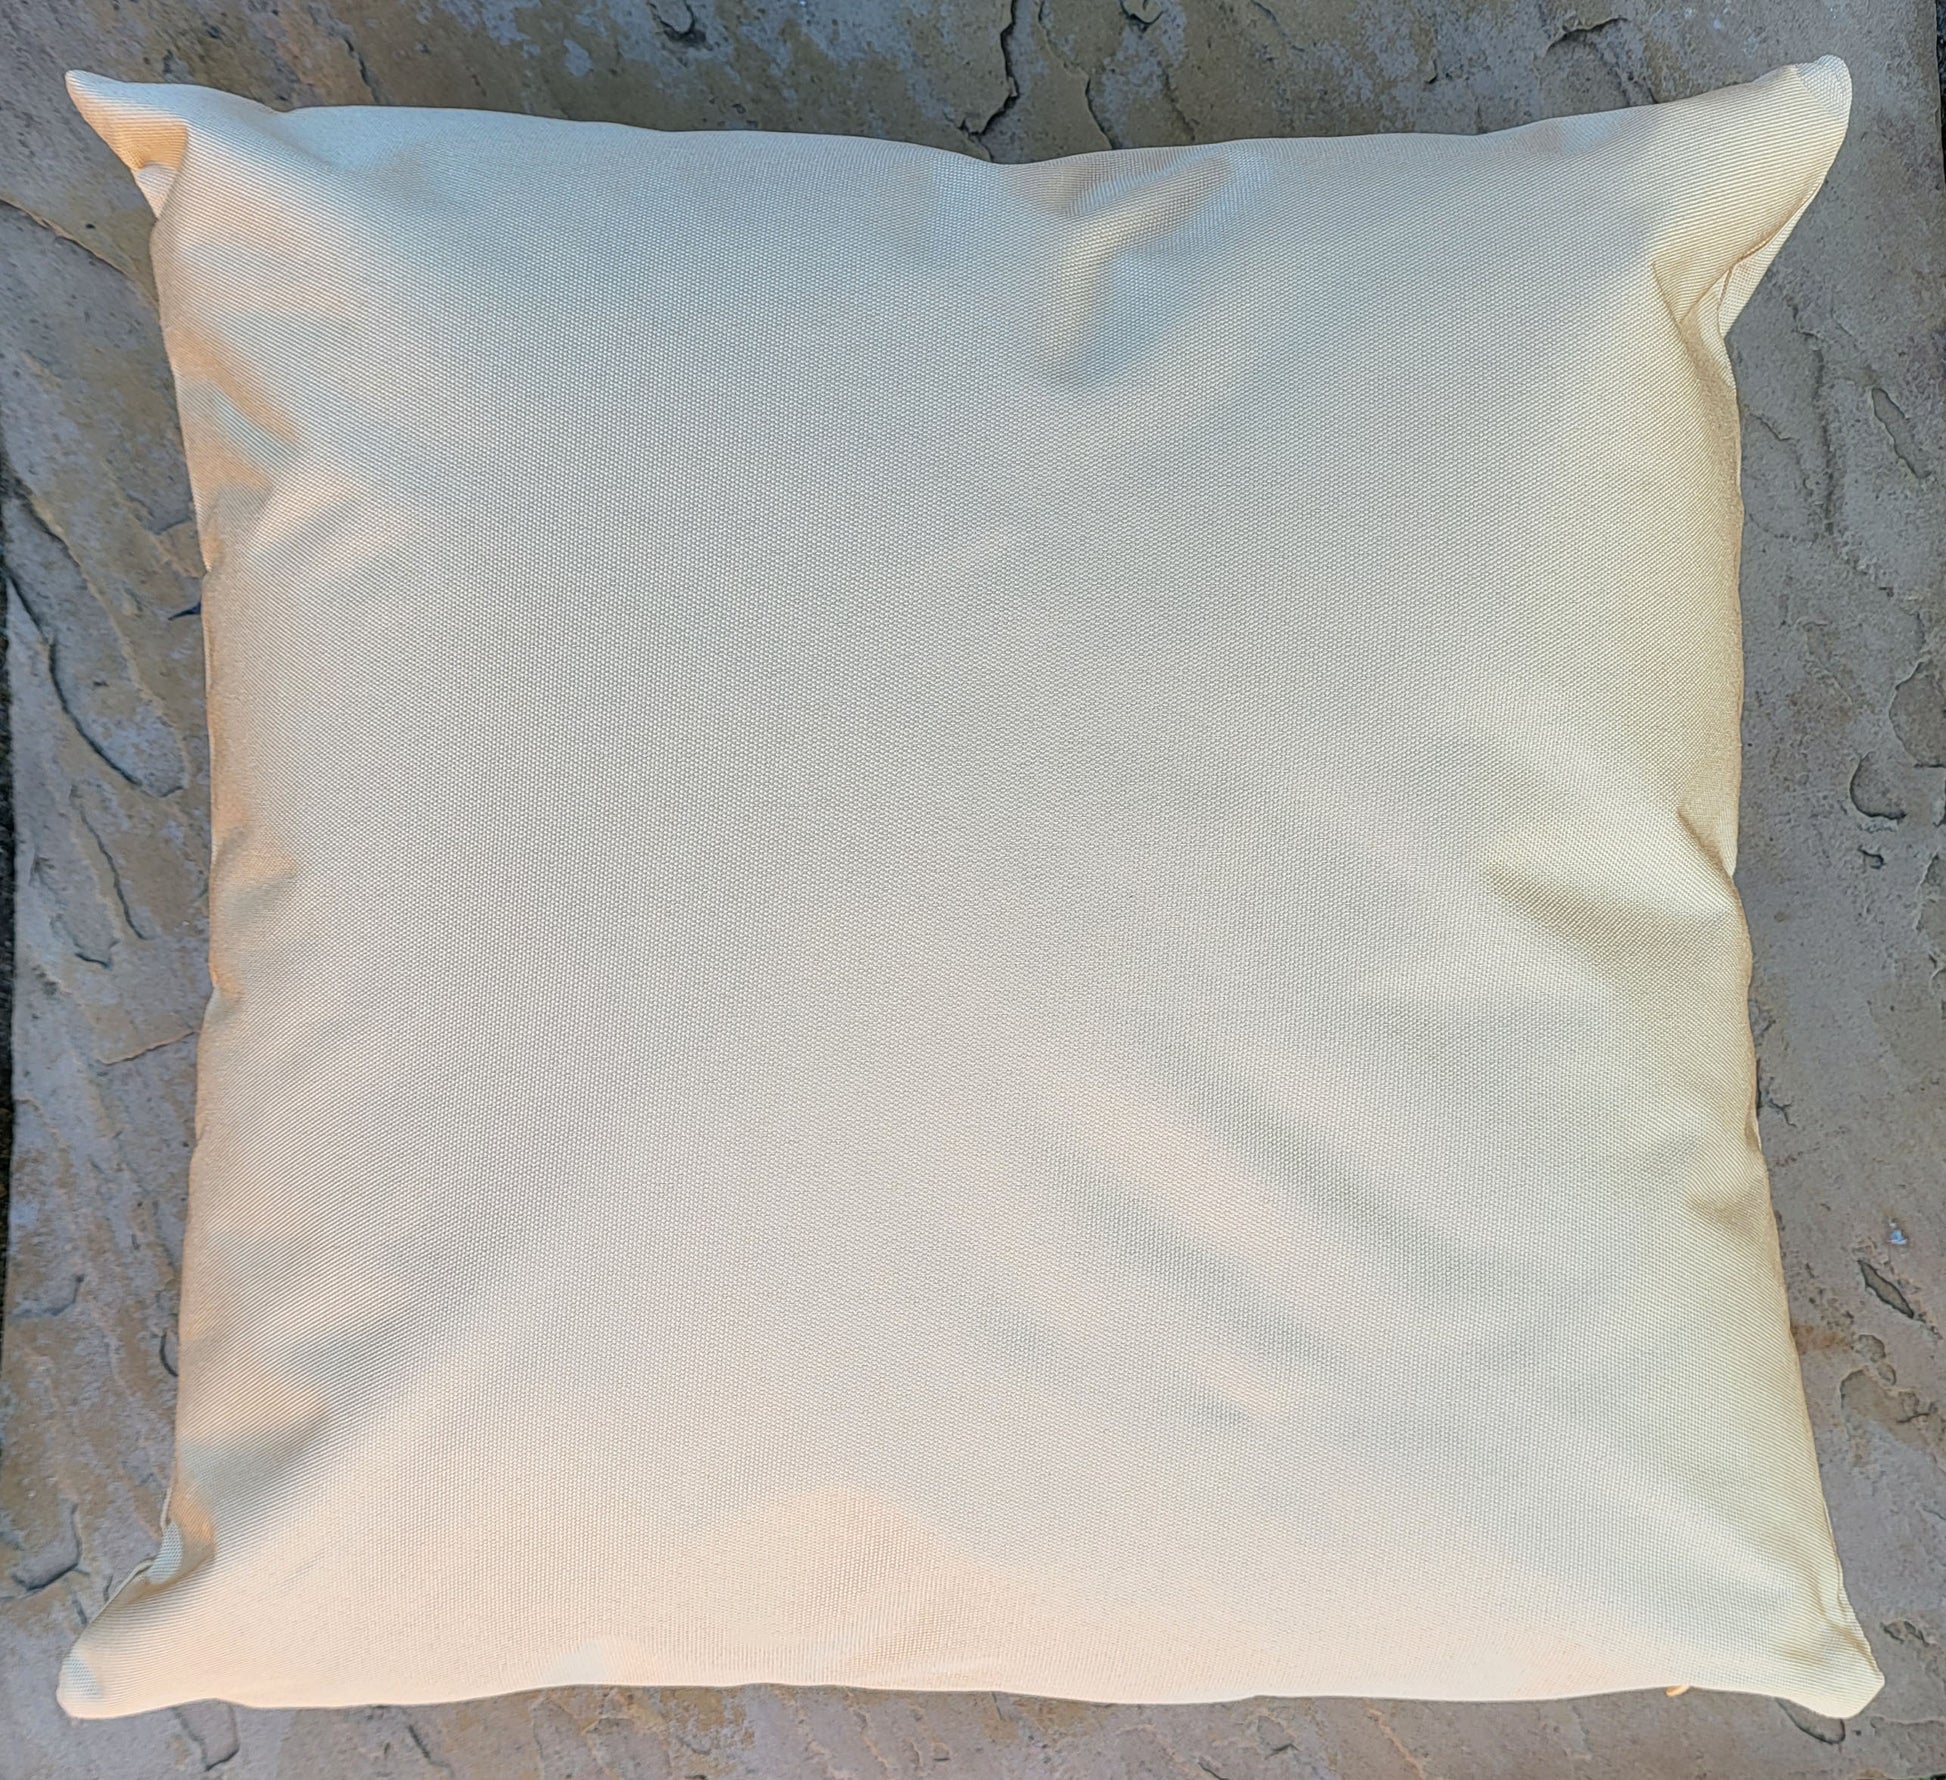 Outdoor Waterproof Garden Rattan Chair Cushions Or Covers Cream